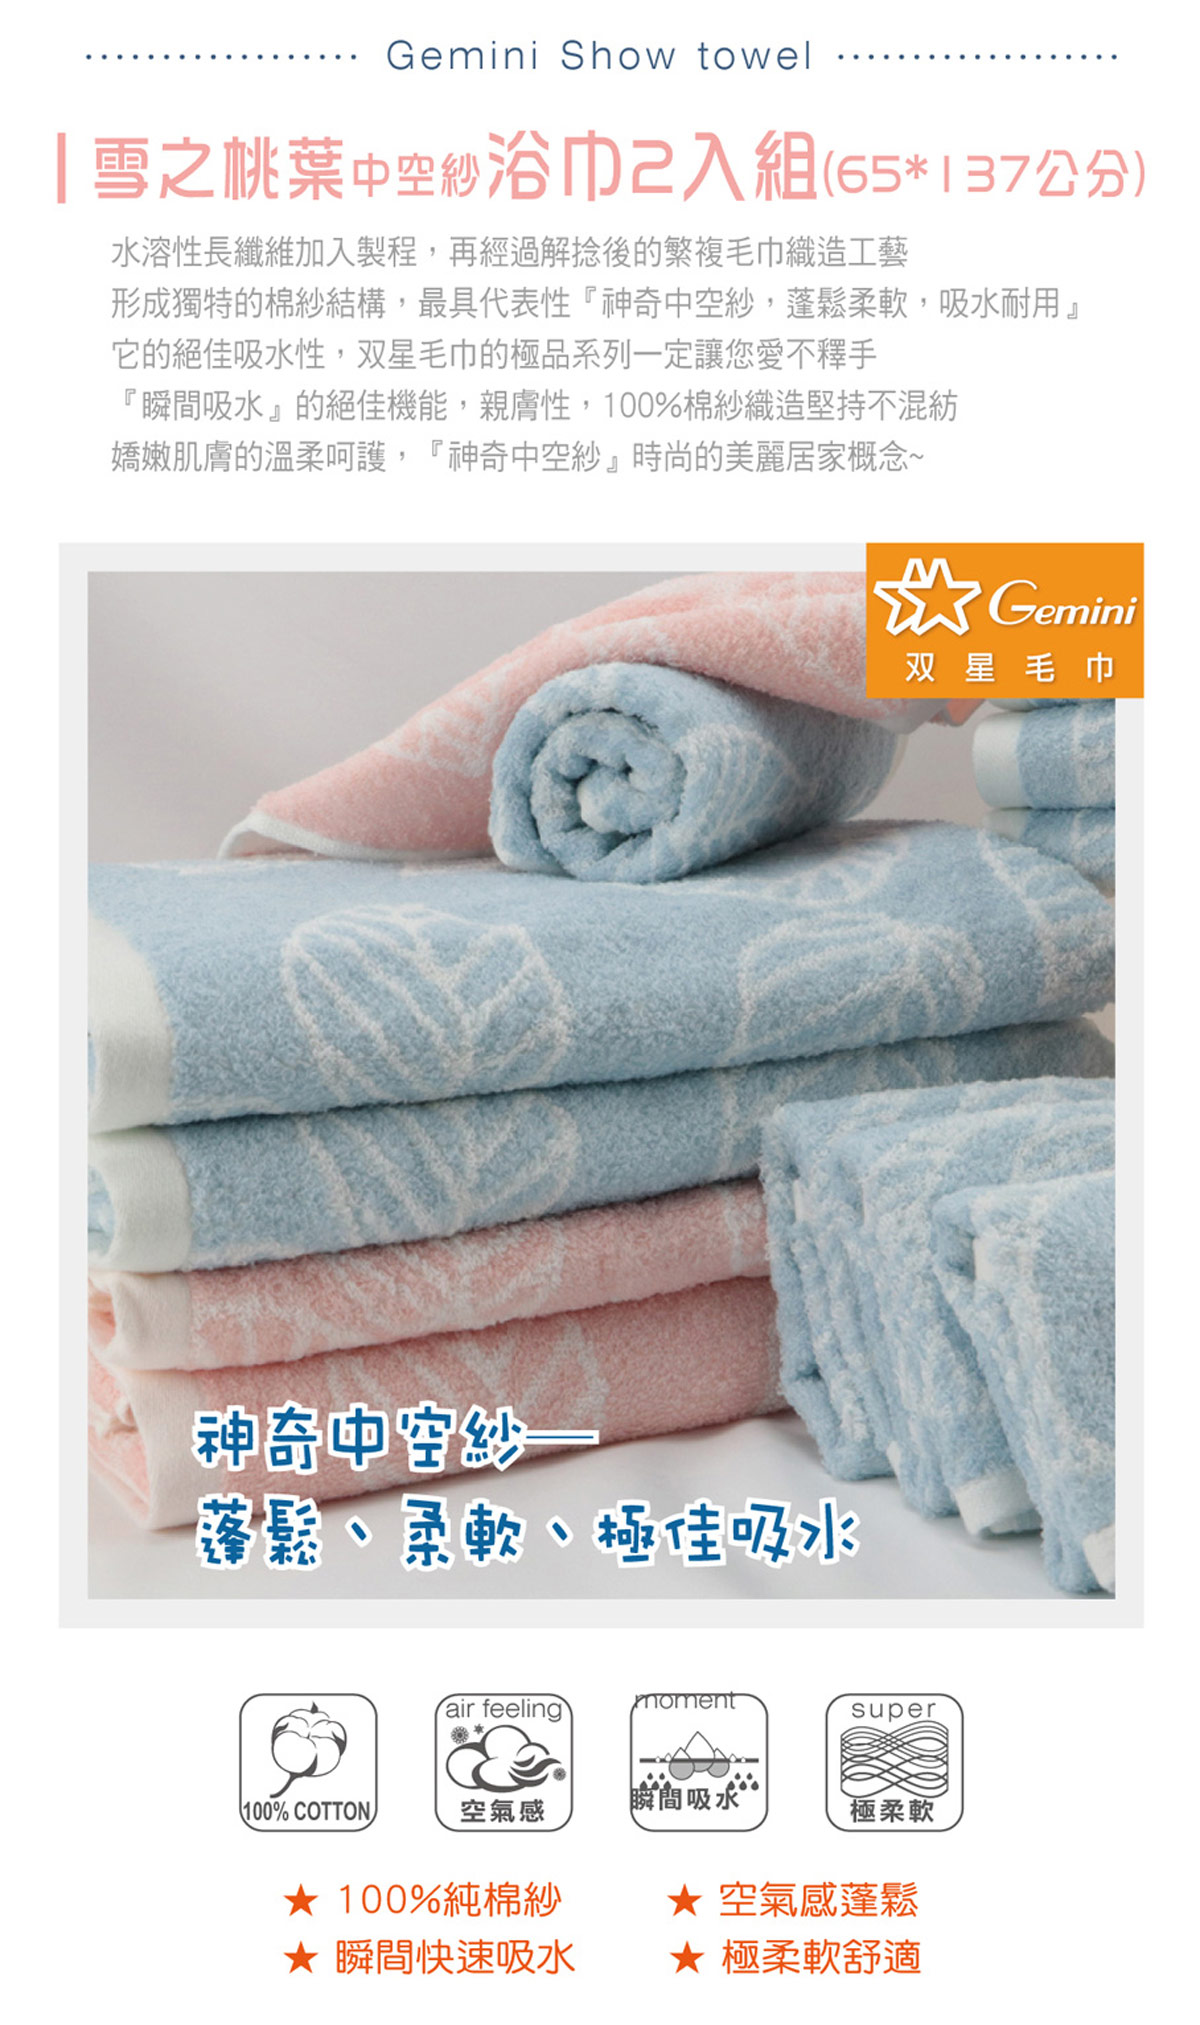 Gemini雙星毛巾中空紗浴巾蓬鬆柔軟,為純棉紗,吸水耐用。